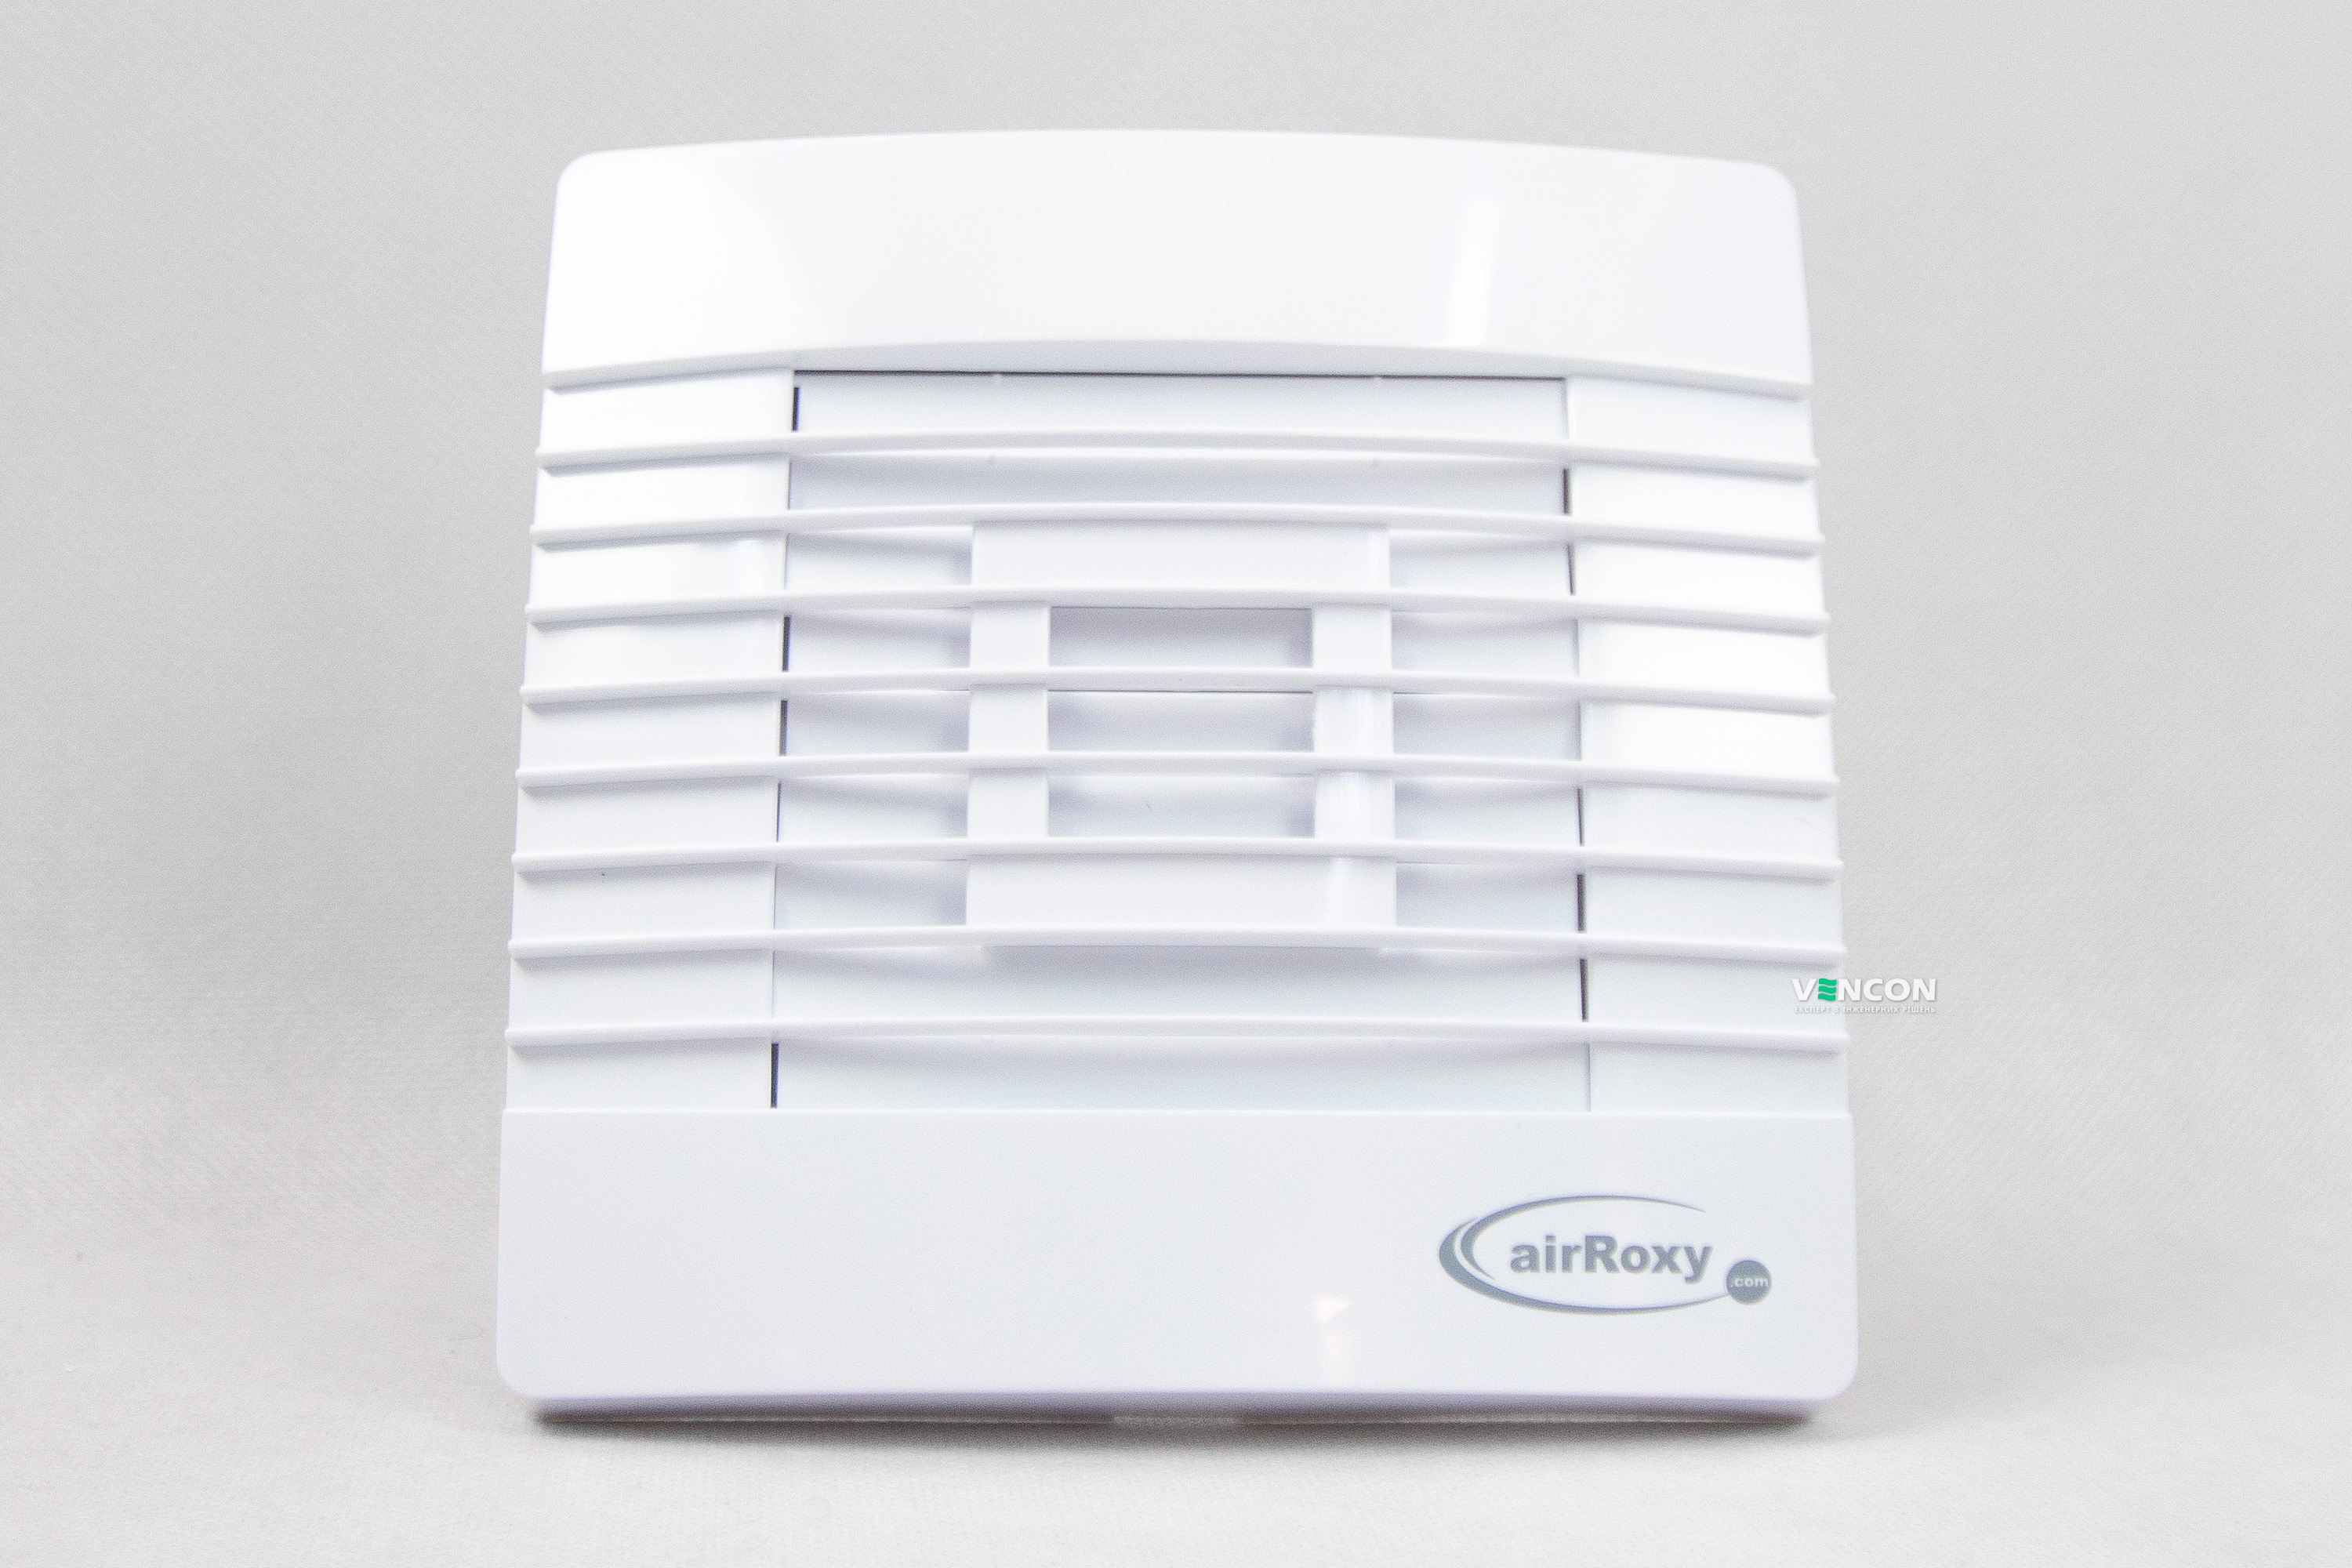 Вытяжной вентилятор AirRoxy pRestige 100 ZG (01-025) цена 1283.00 грн - фотография 2